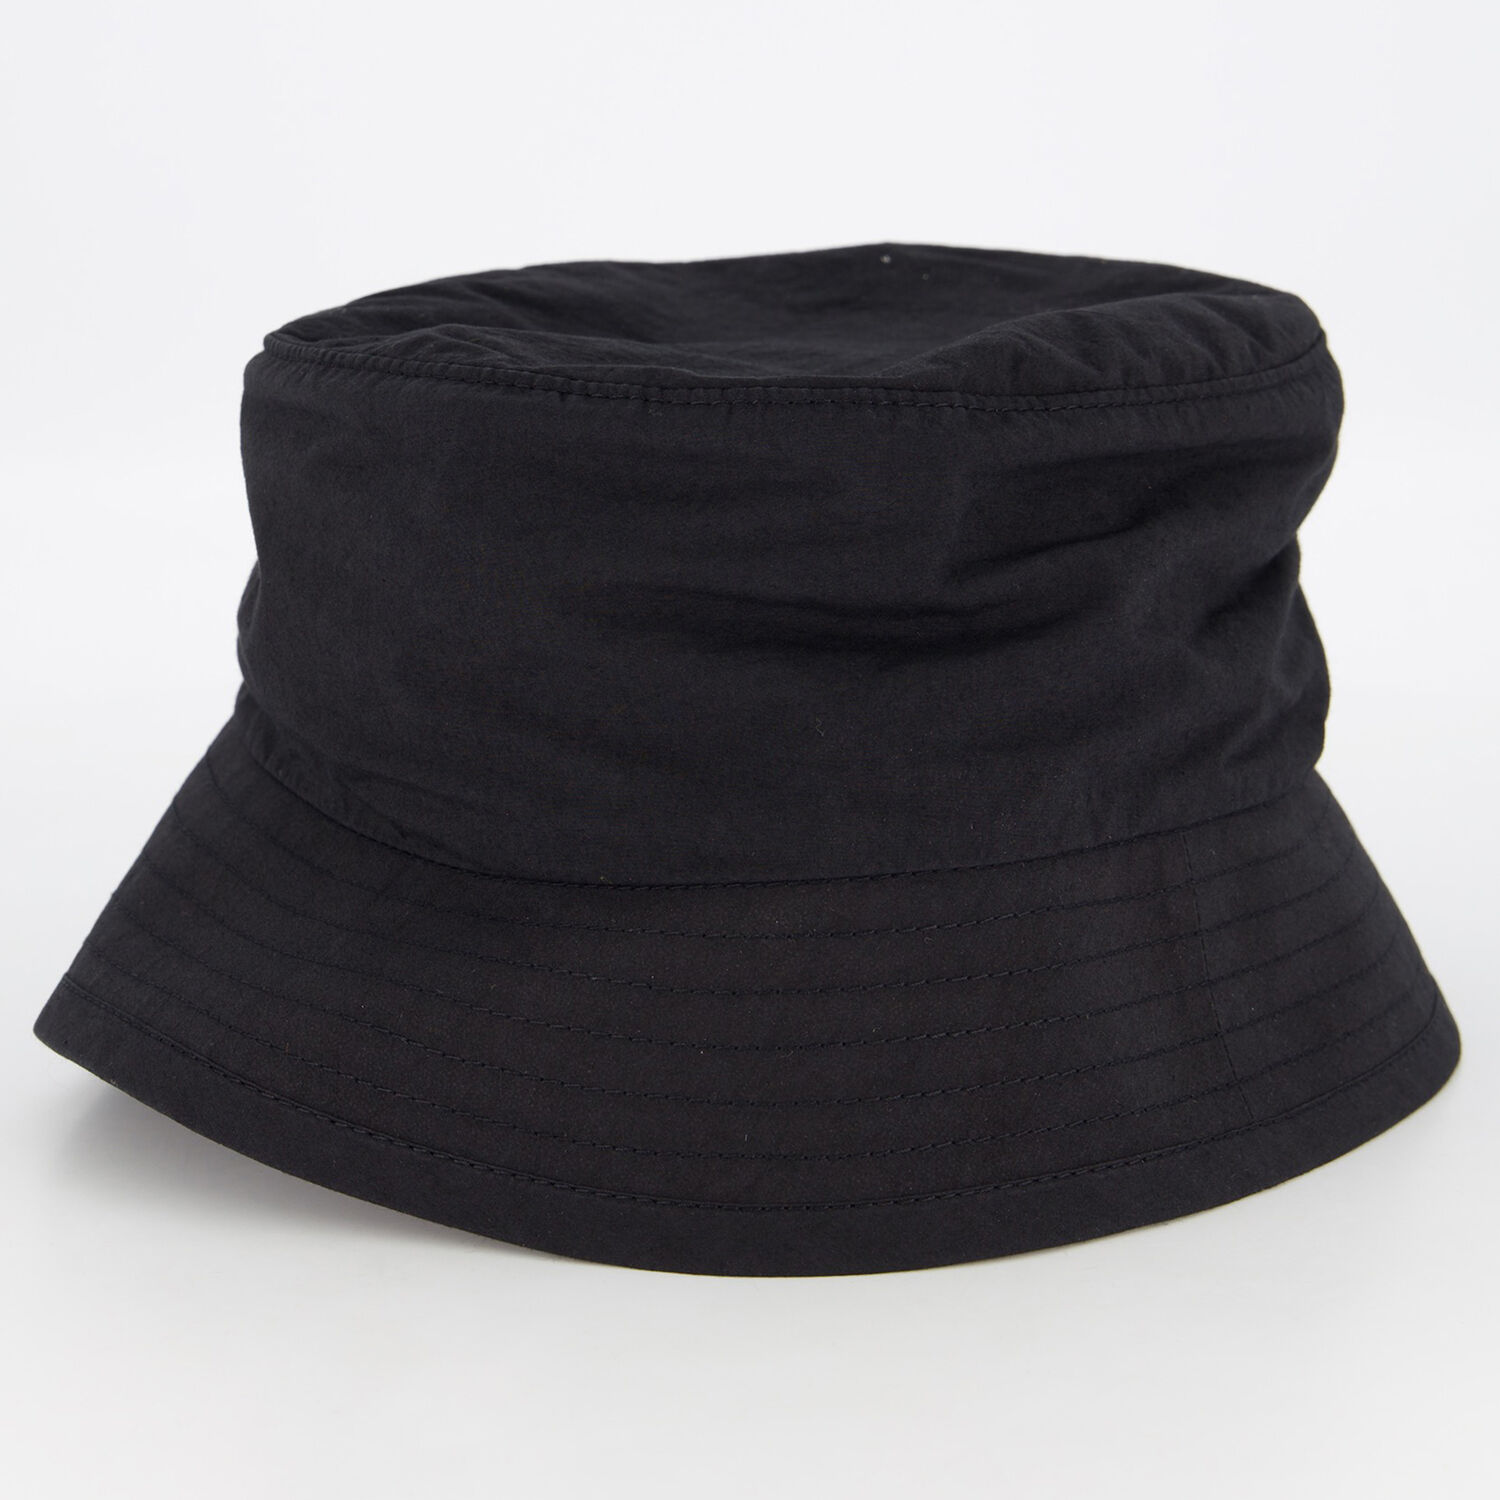 Black Bucket Hat - TK Maxx UK